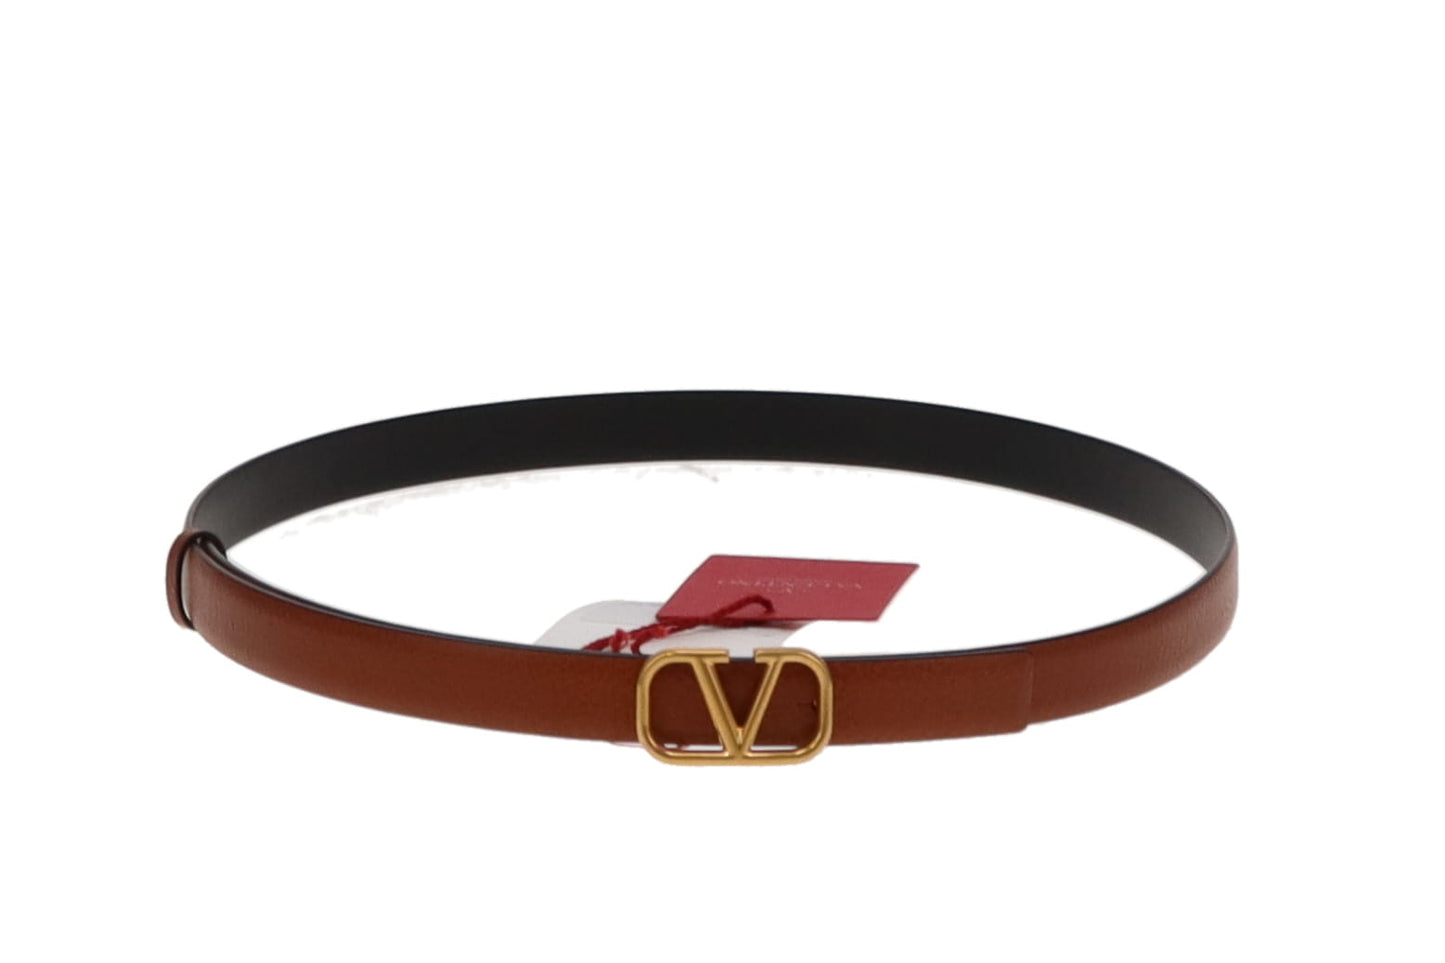 Valentino Belt Tan Leather 90cm